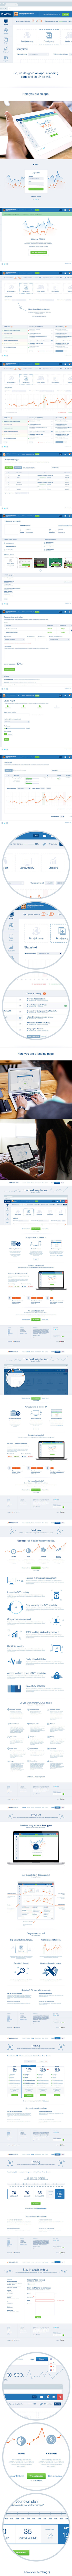 seoupper SEO tool app landing page Website Webdesign enlive Michal michanczyk